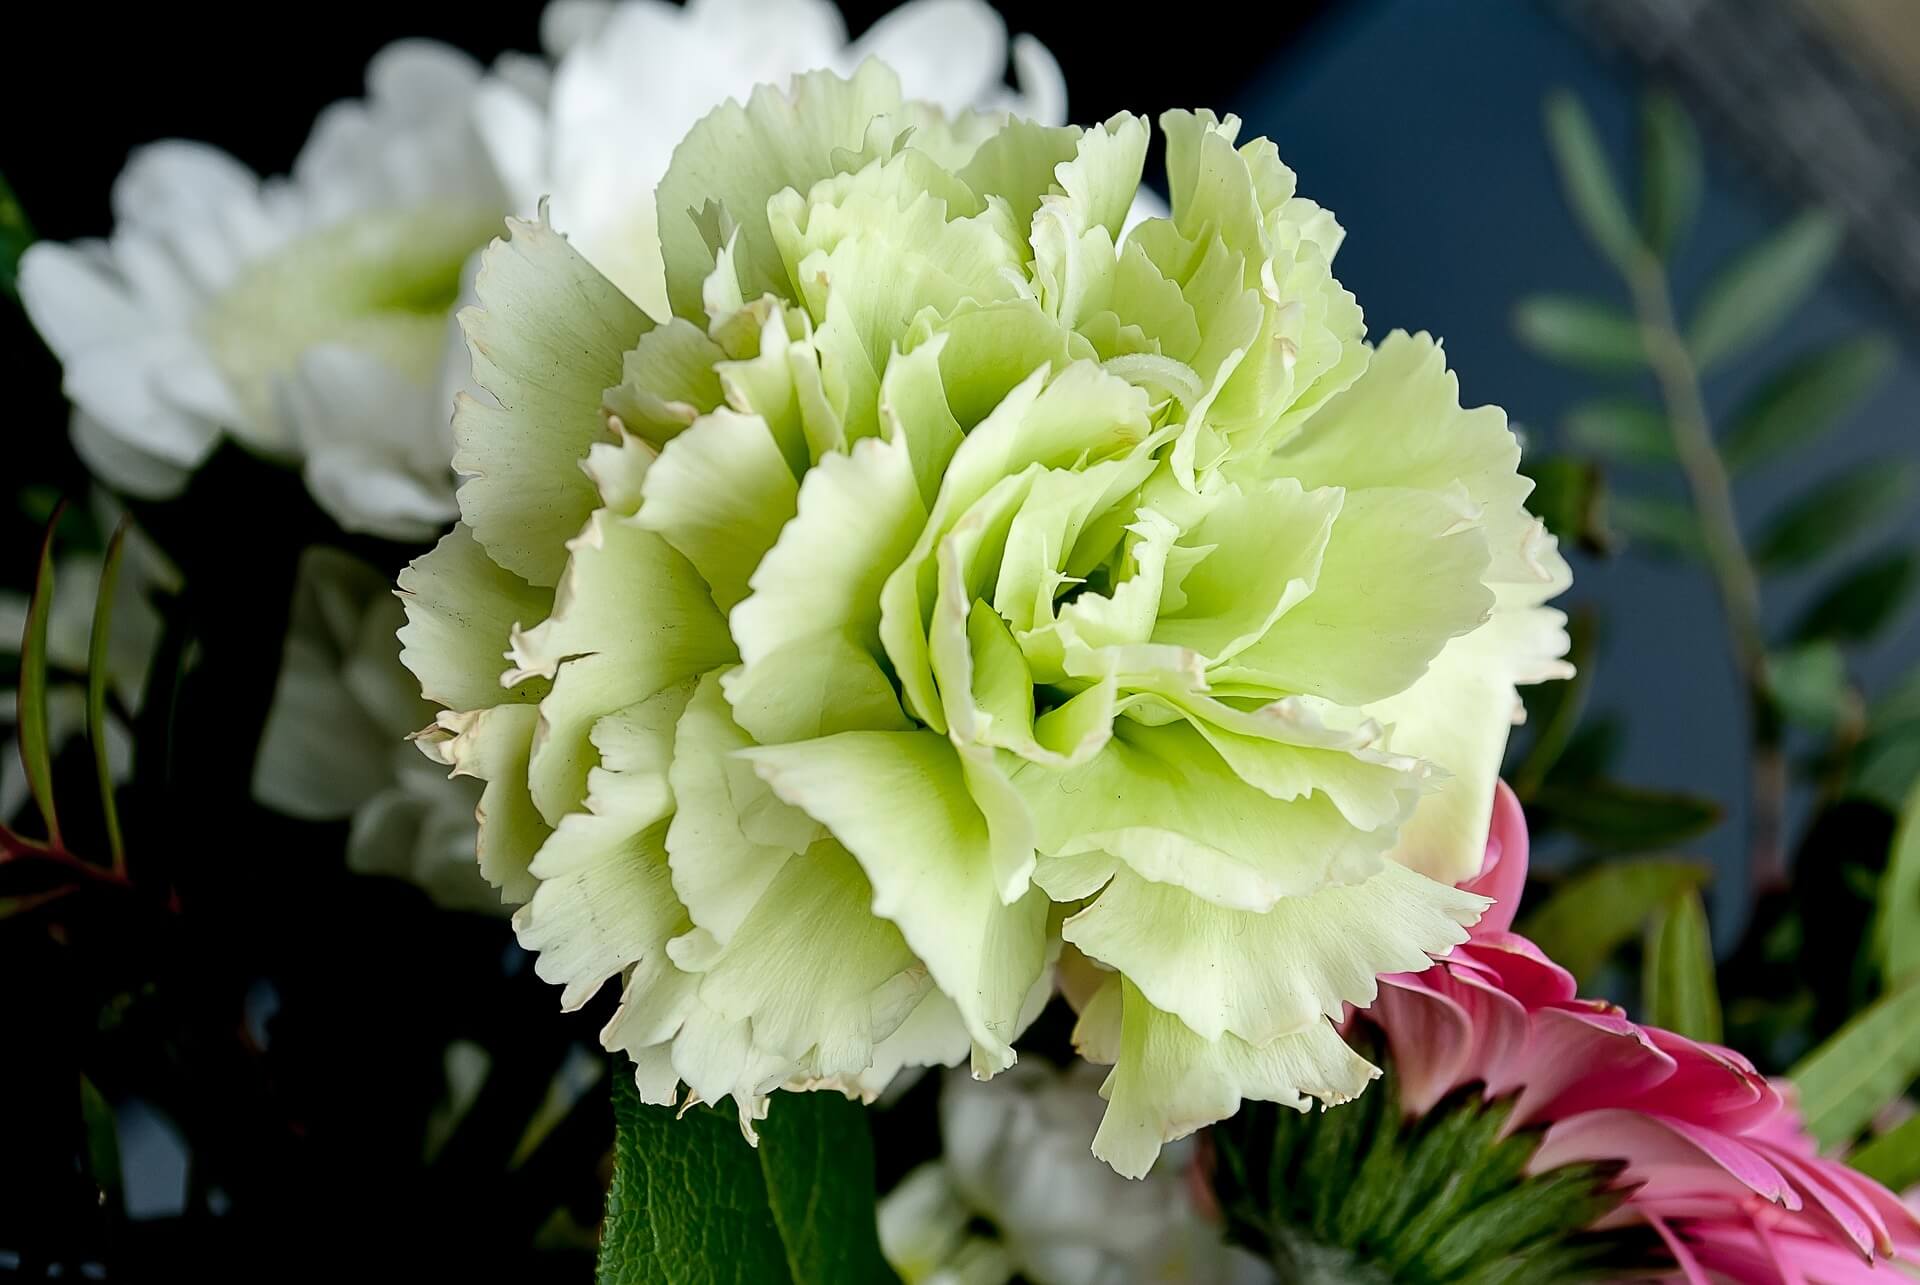 Green carnations